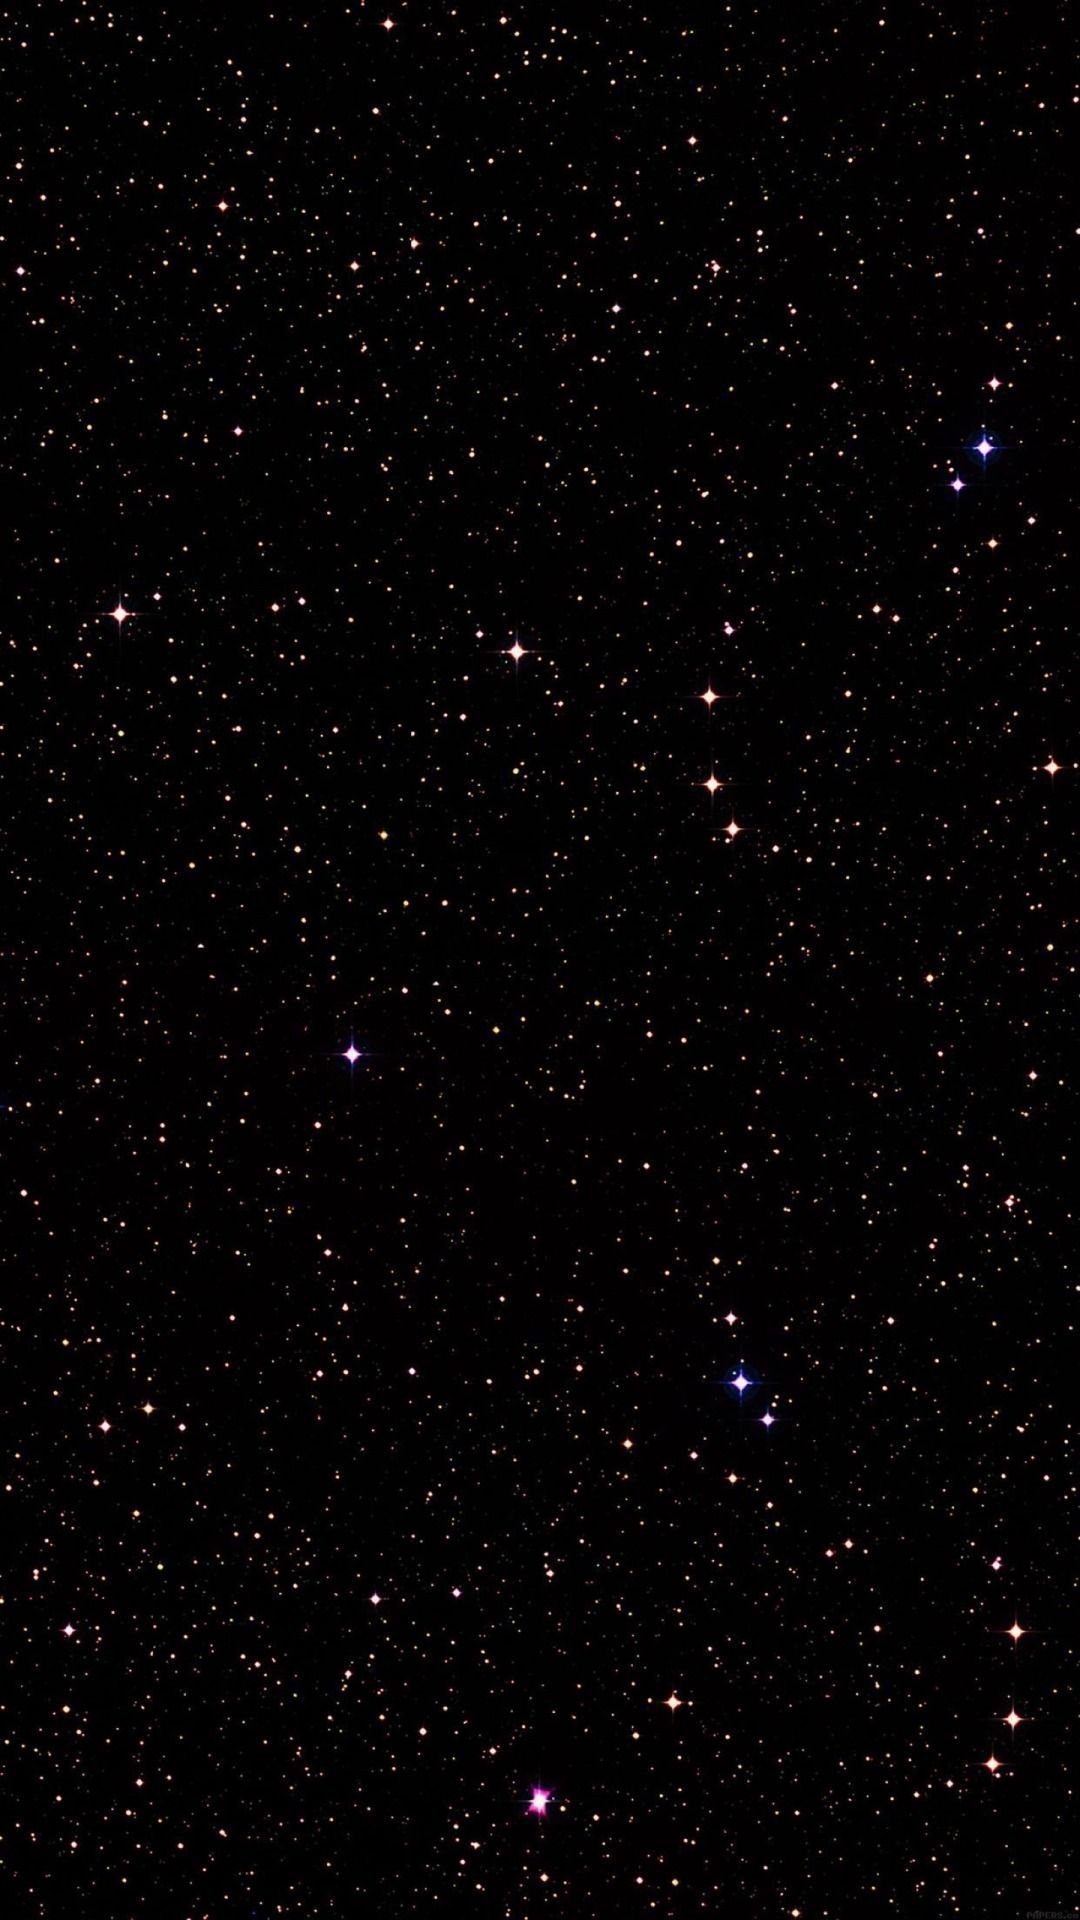 561192 1920x1080 snow sky night dark black stars trees landscape wallpaper  JPG 815 kB  Rare Gallery HD Wallpapers